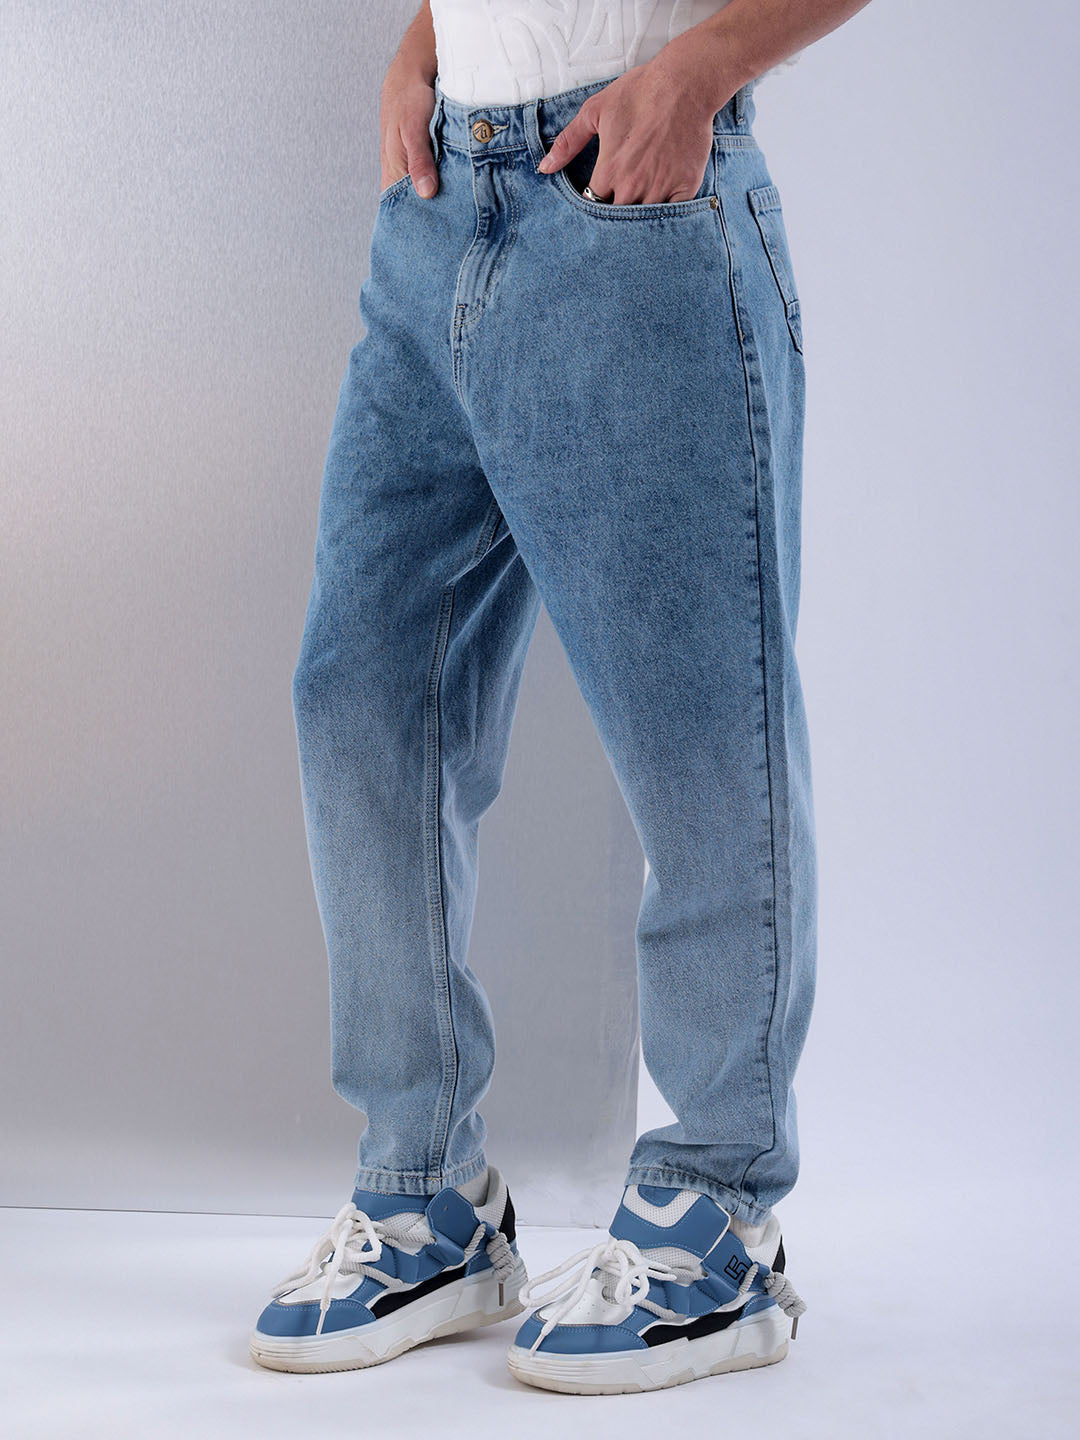 Shop Men Relaxed Fit Jeans Online.